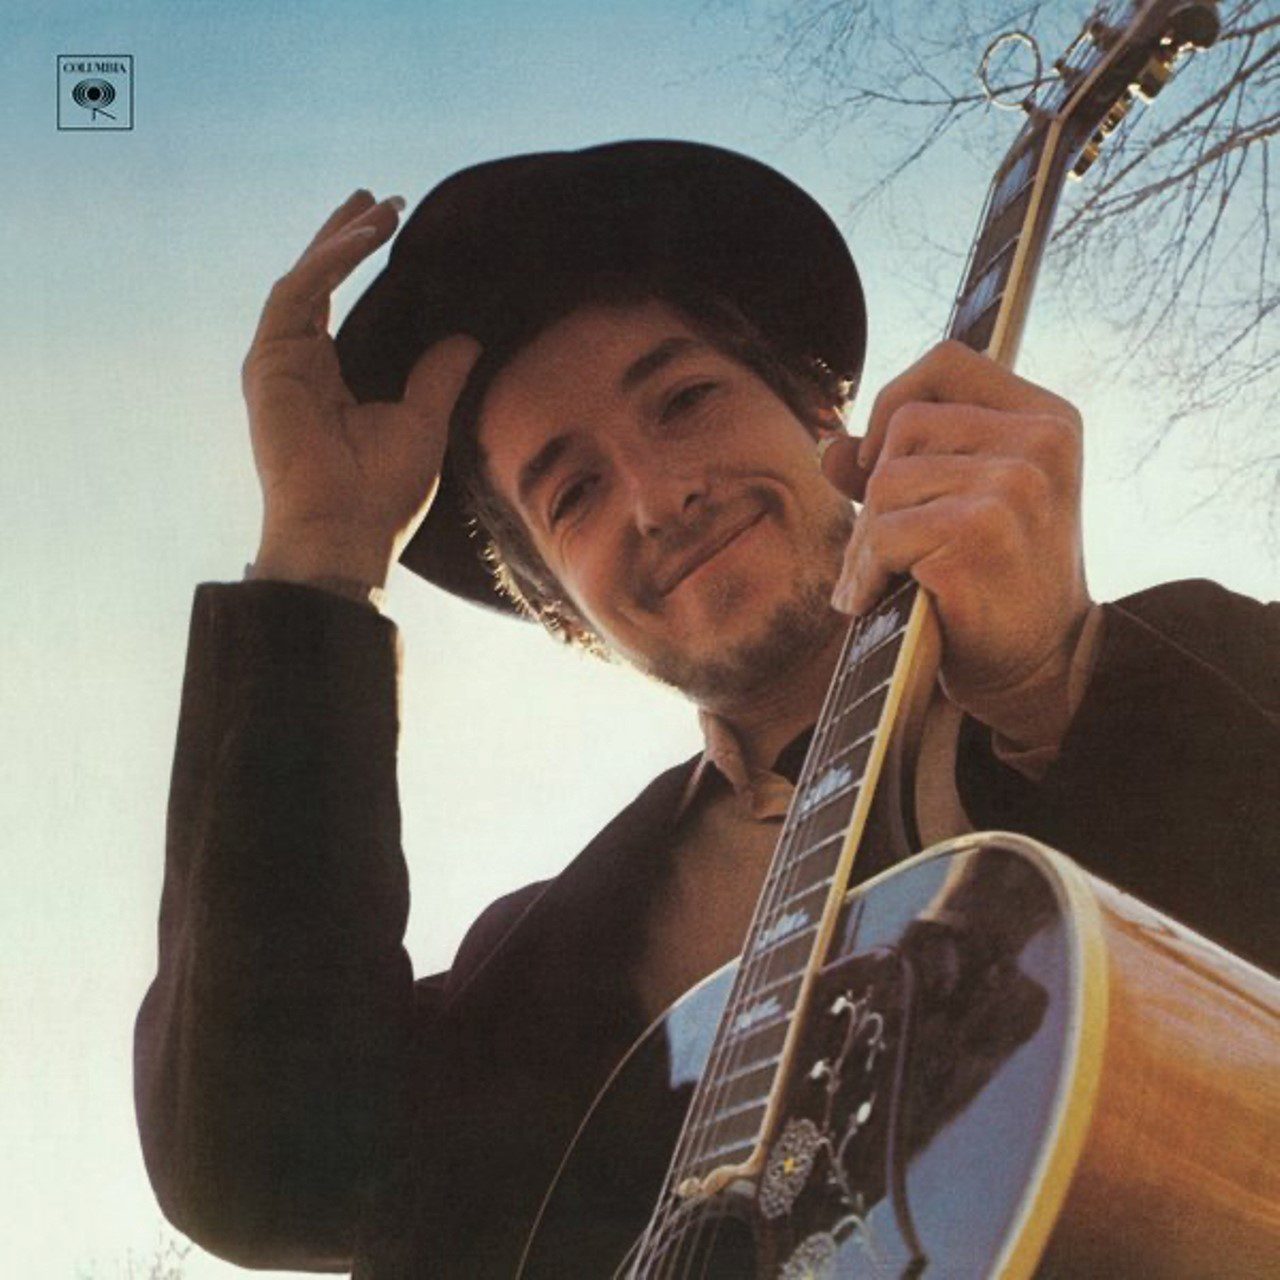 Bob Dylan - Nashville Skyline cover album